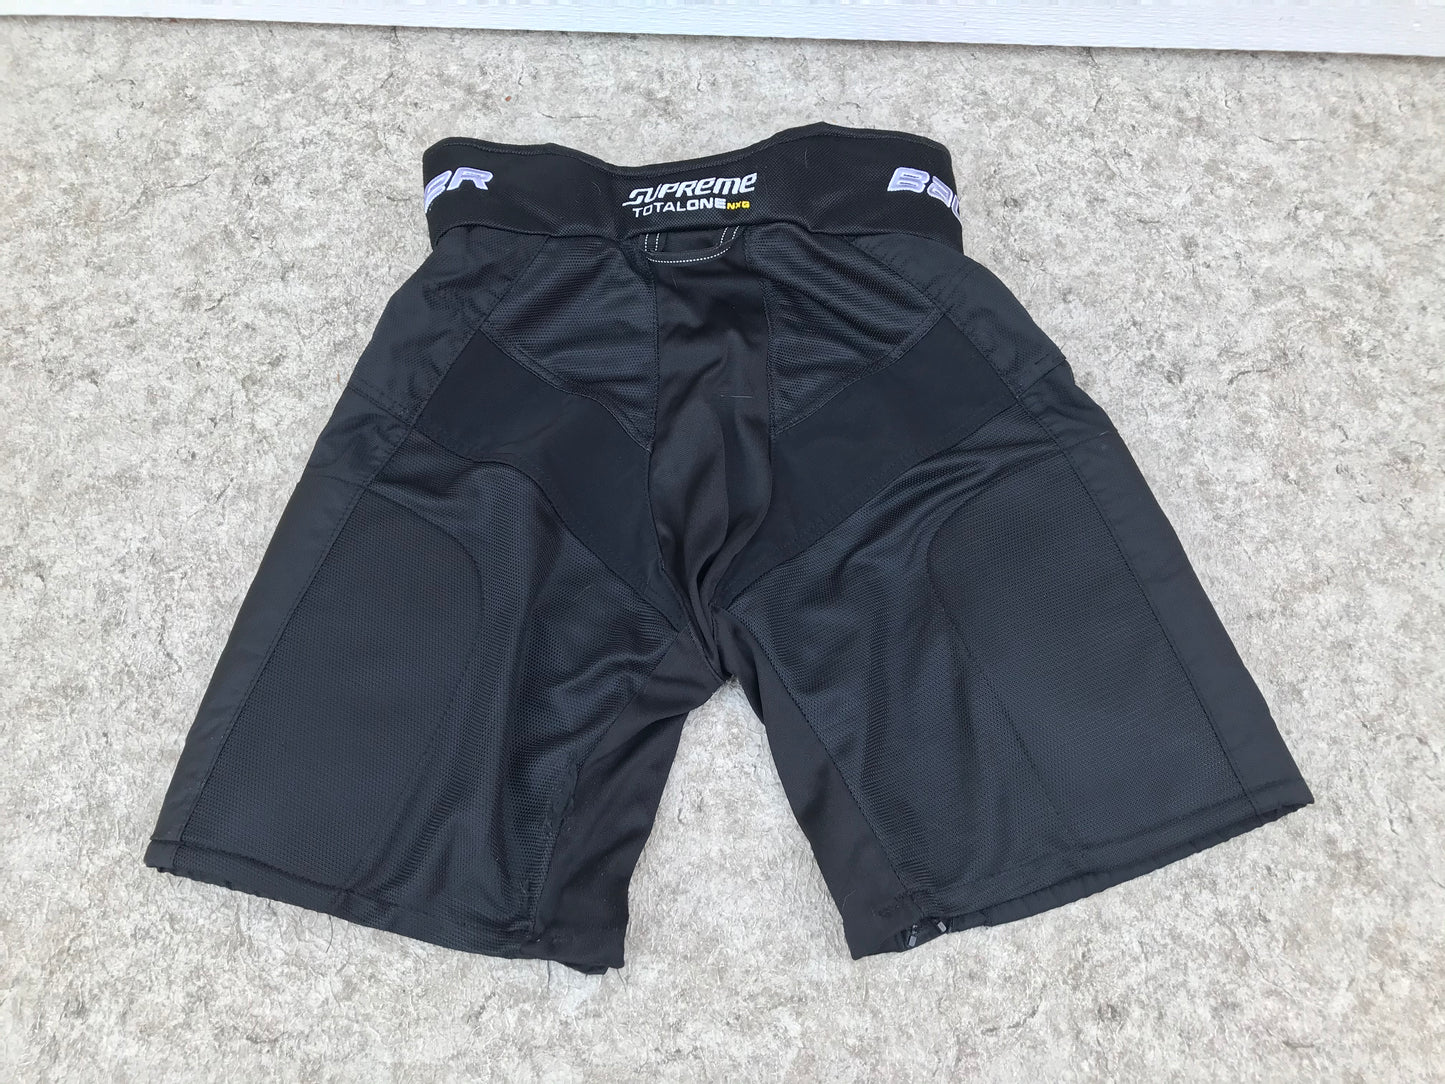 Hockey Pants Men's Size Small Bauer Supreme Total One NXG Pants No Girdle Players Pants Black Excellent